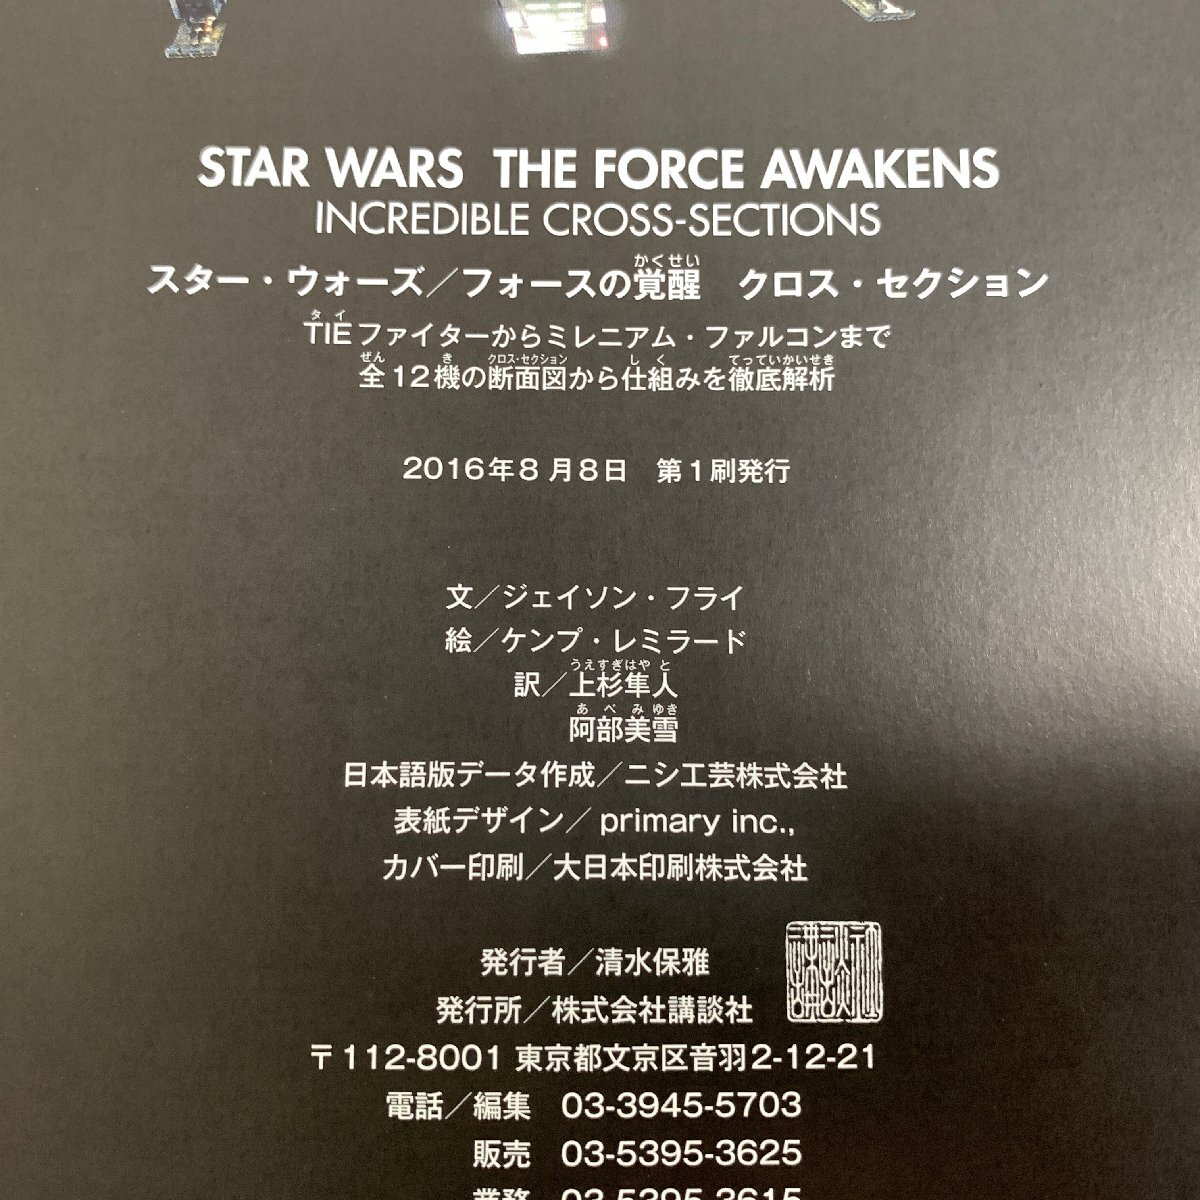 f001 G Star Wars STAR WARS episode 1*3 force. .. Cross section 3 pcs. set Shogakukan Inc. .. company Thai Fighter 